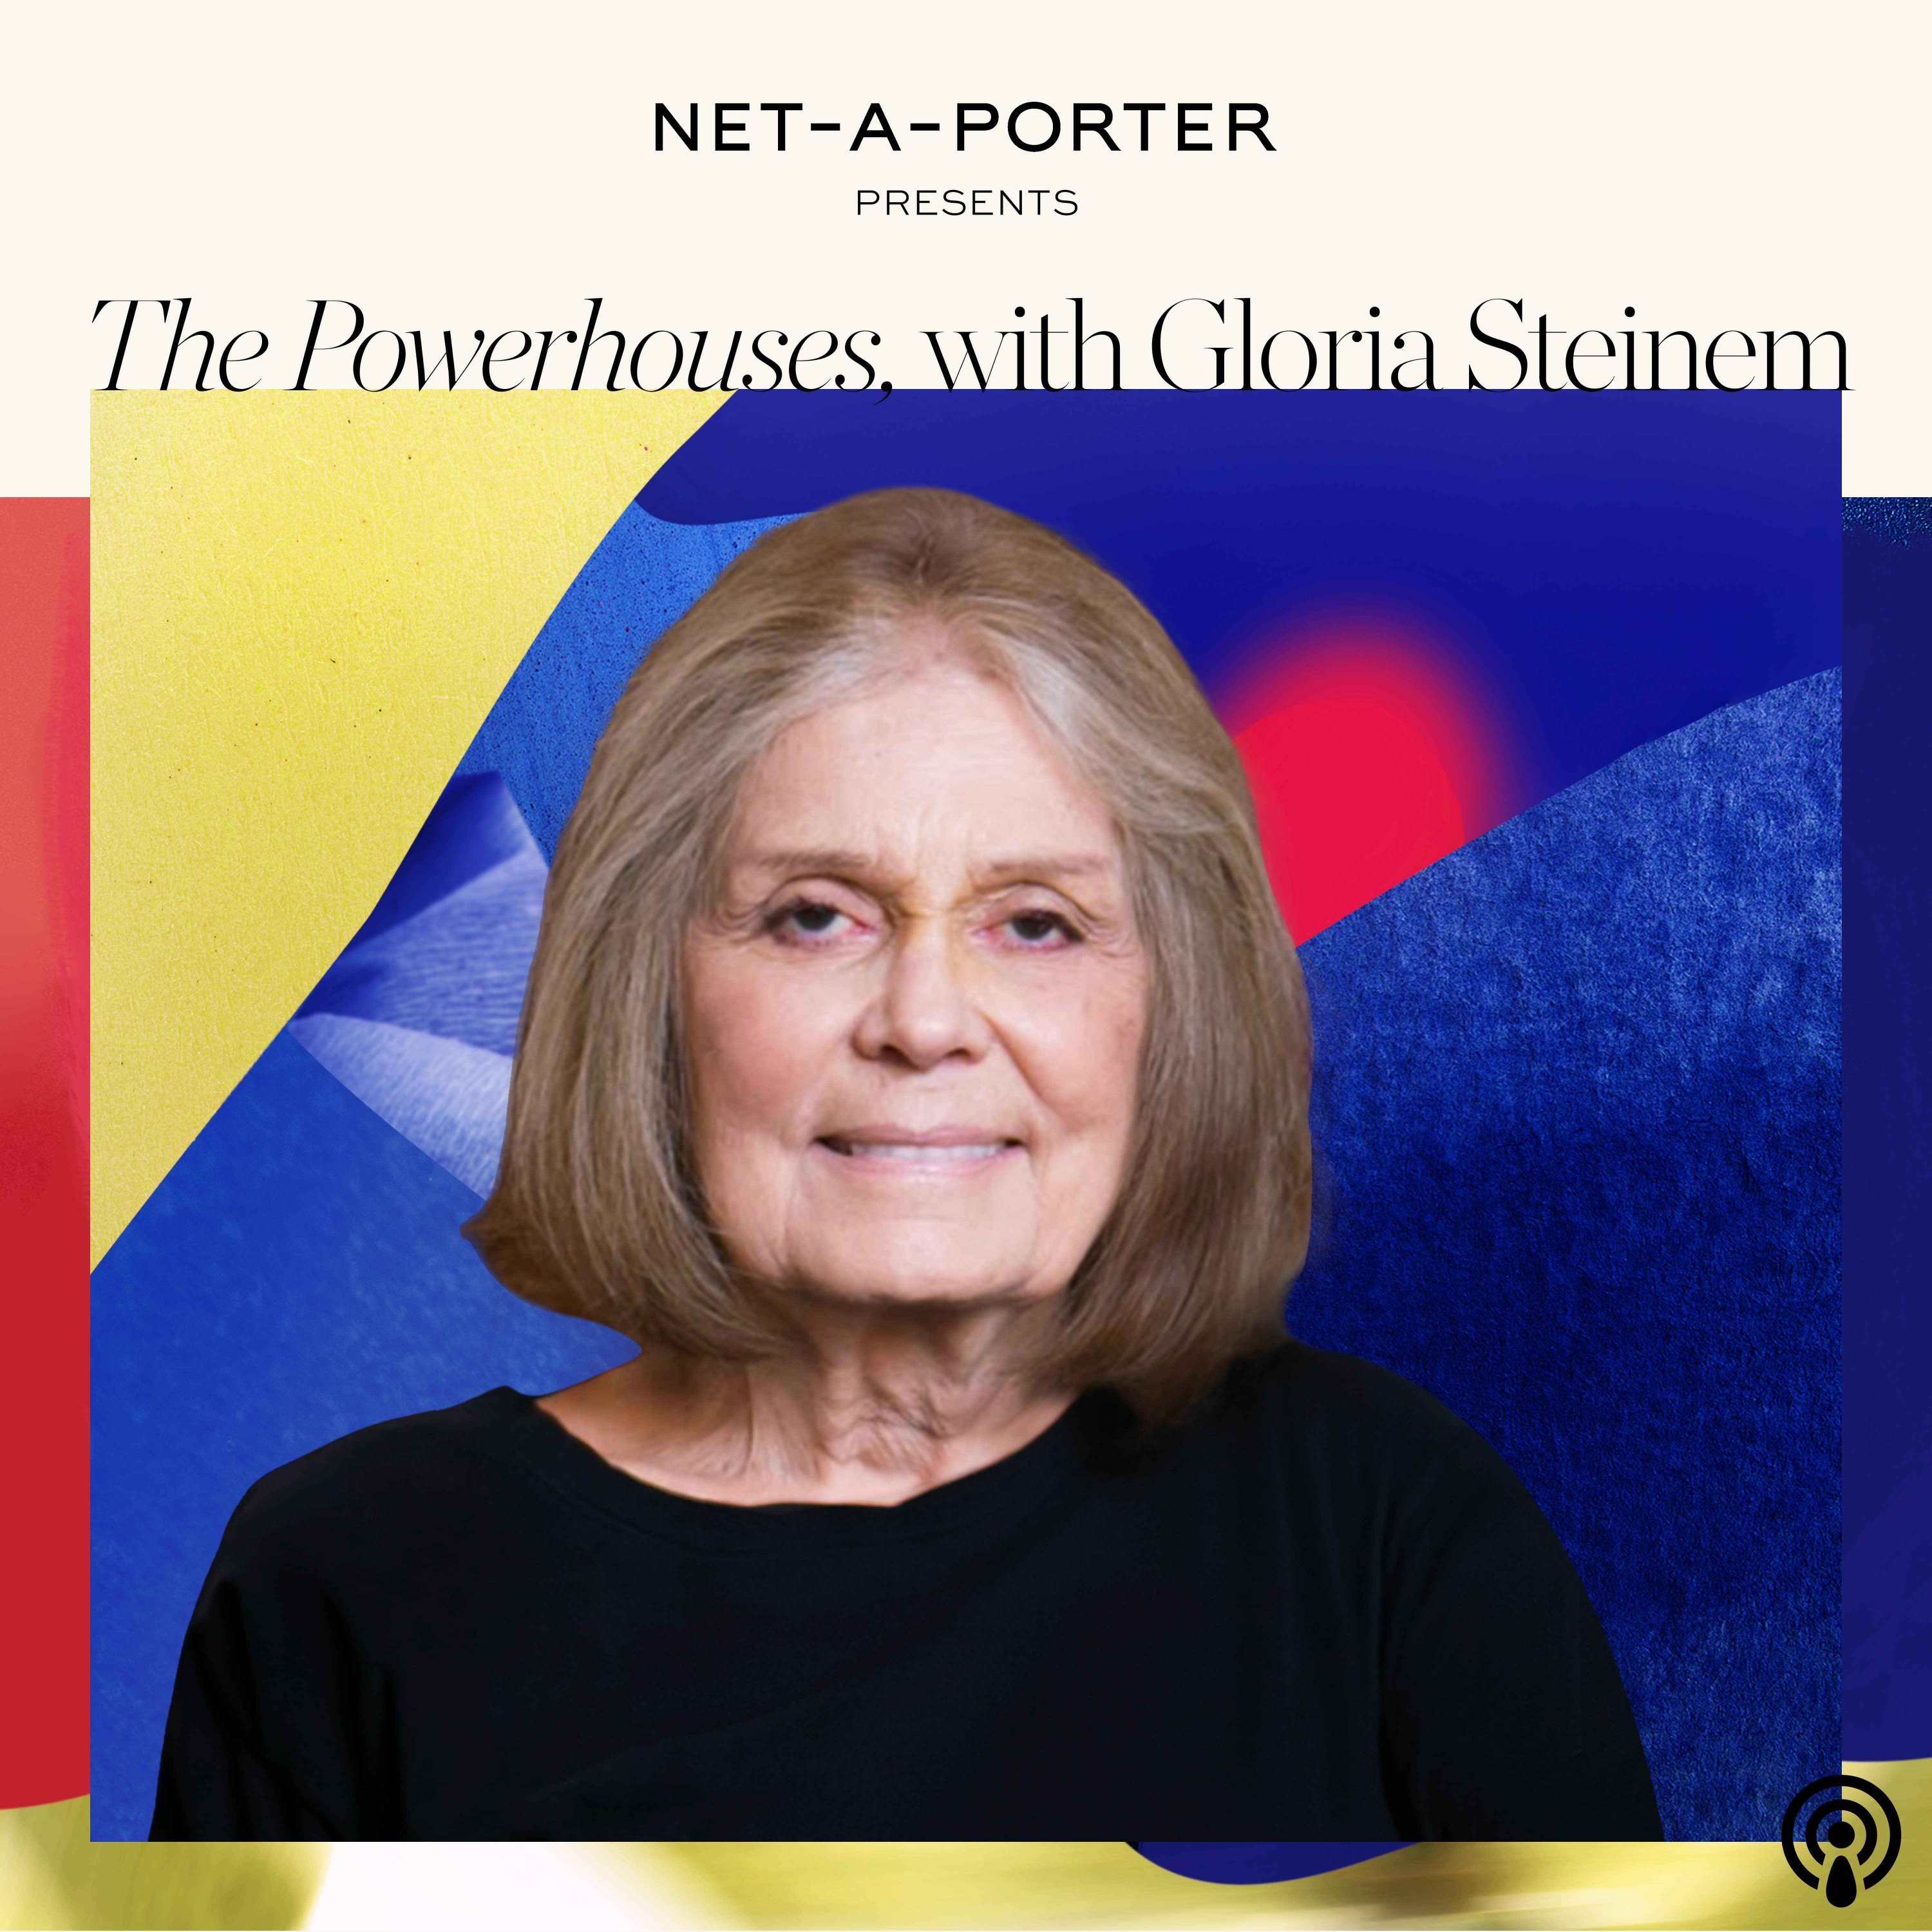 Turning 90 and celebrating global sisterhood, with Gloria Steinem